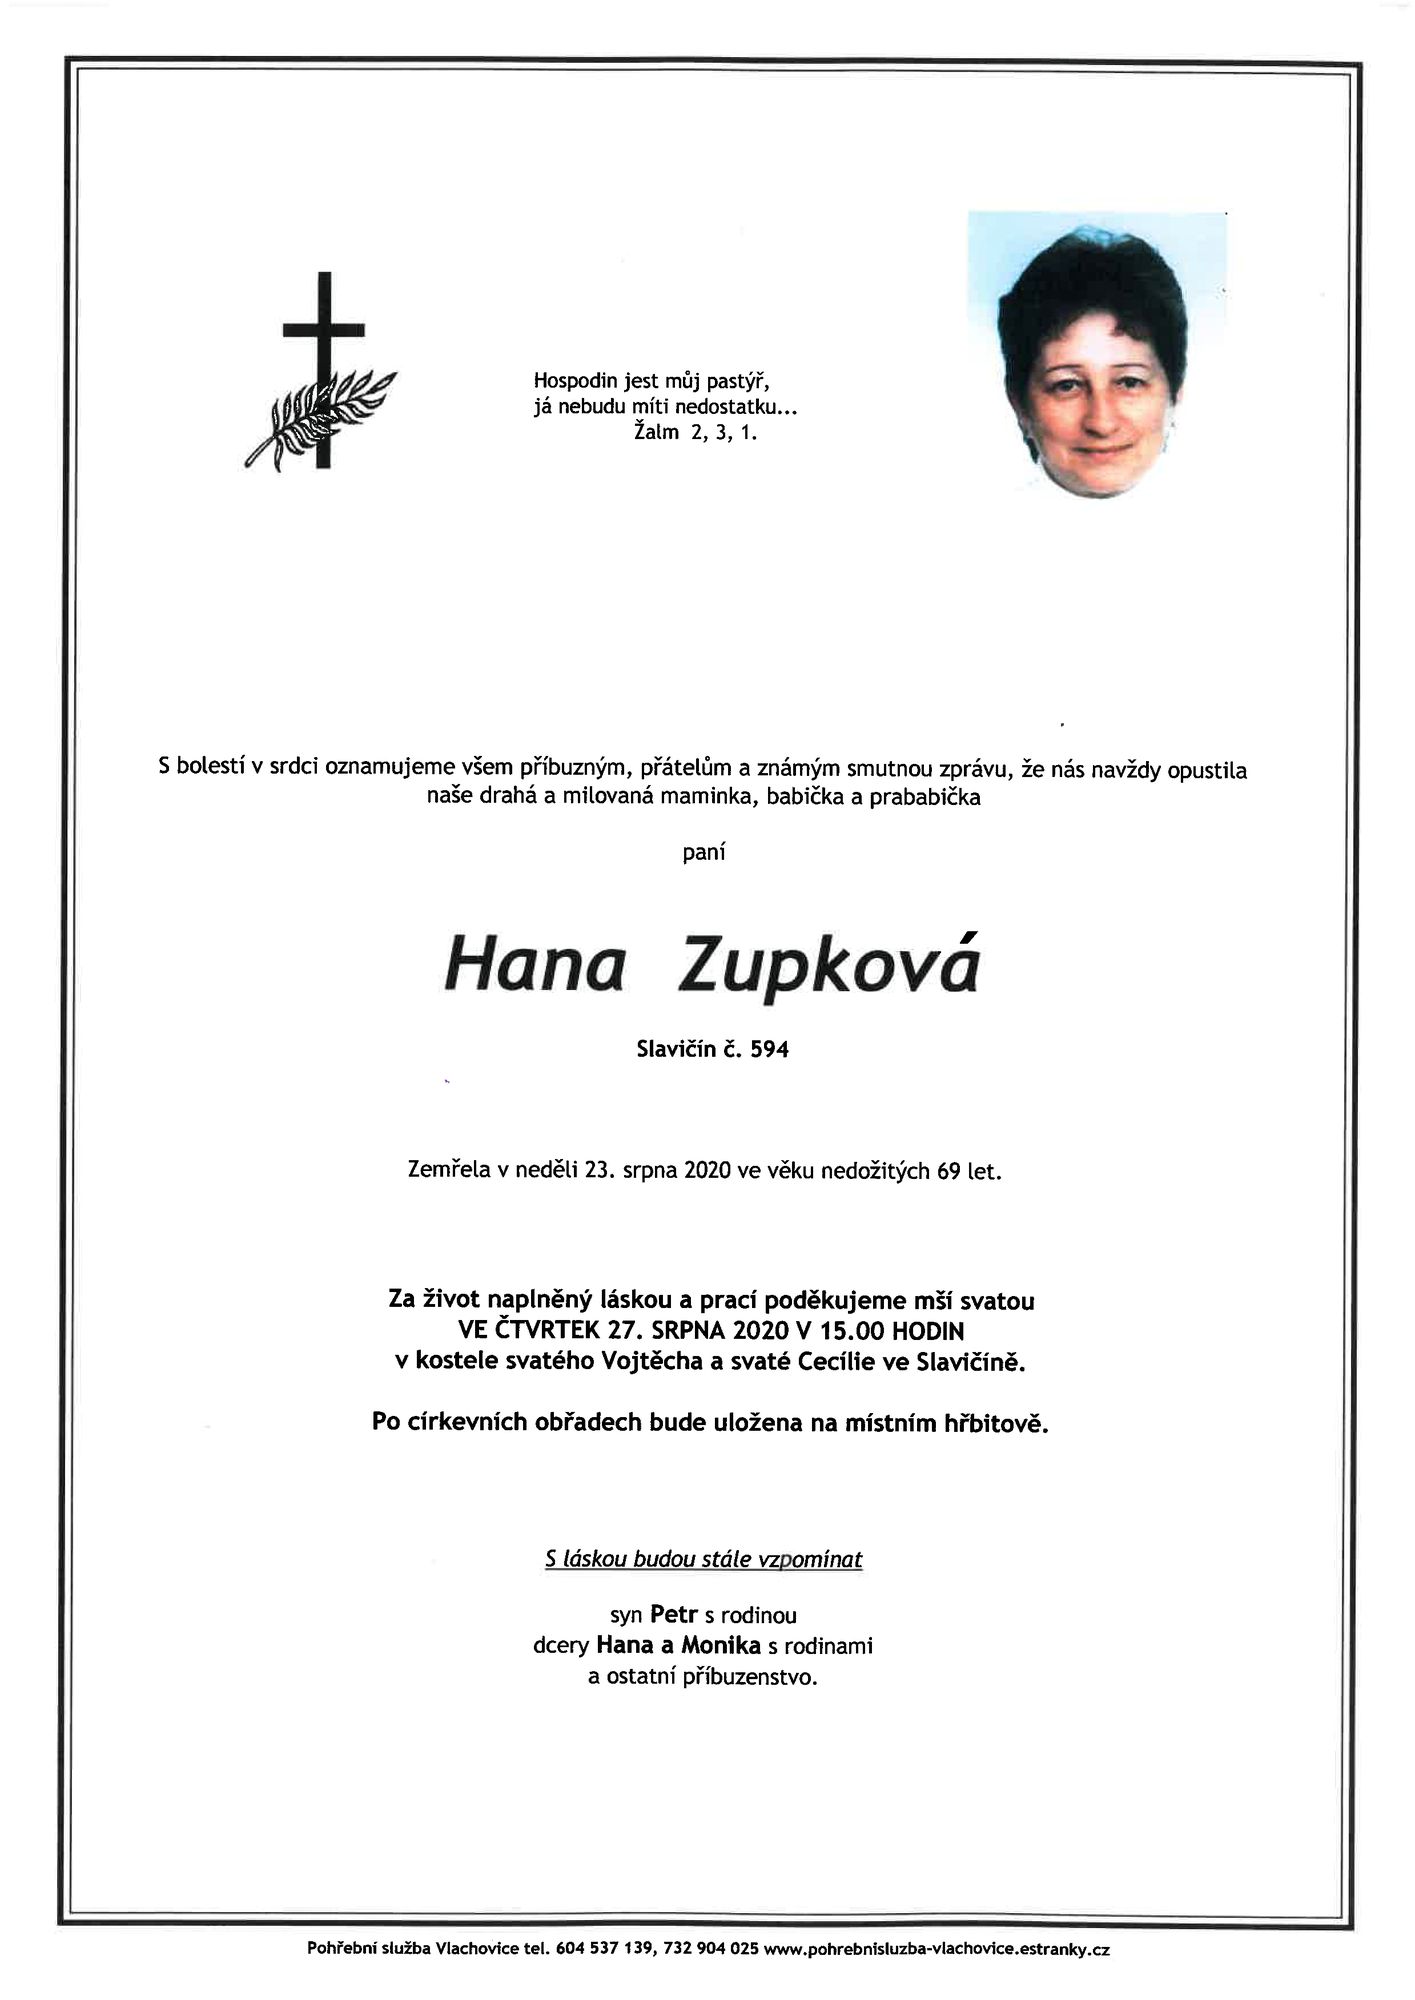 Hana Zupková